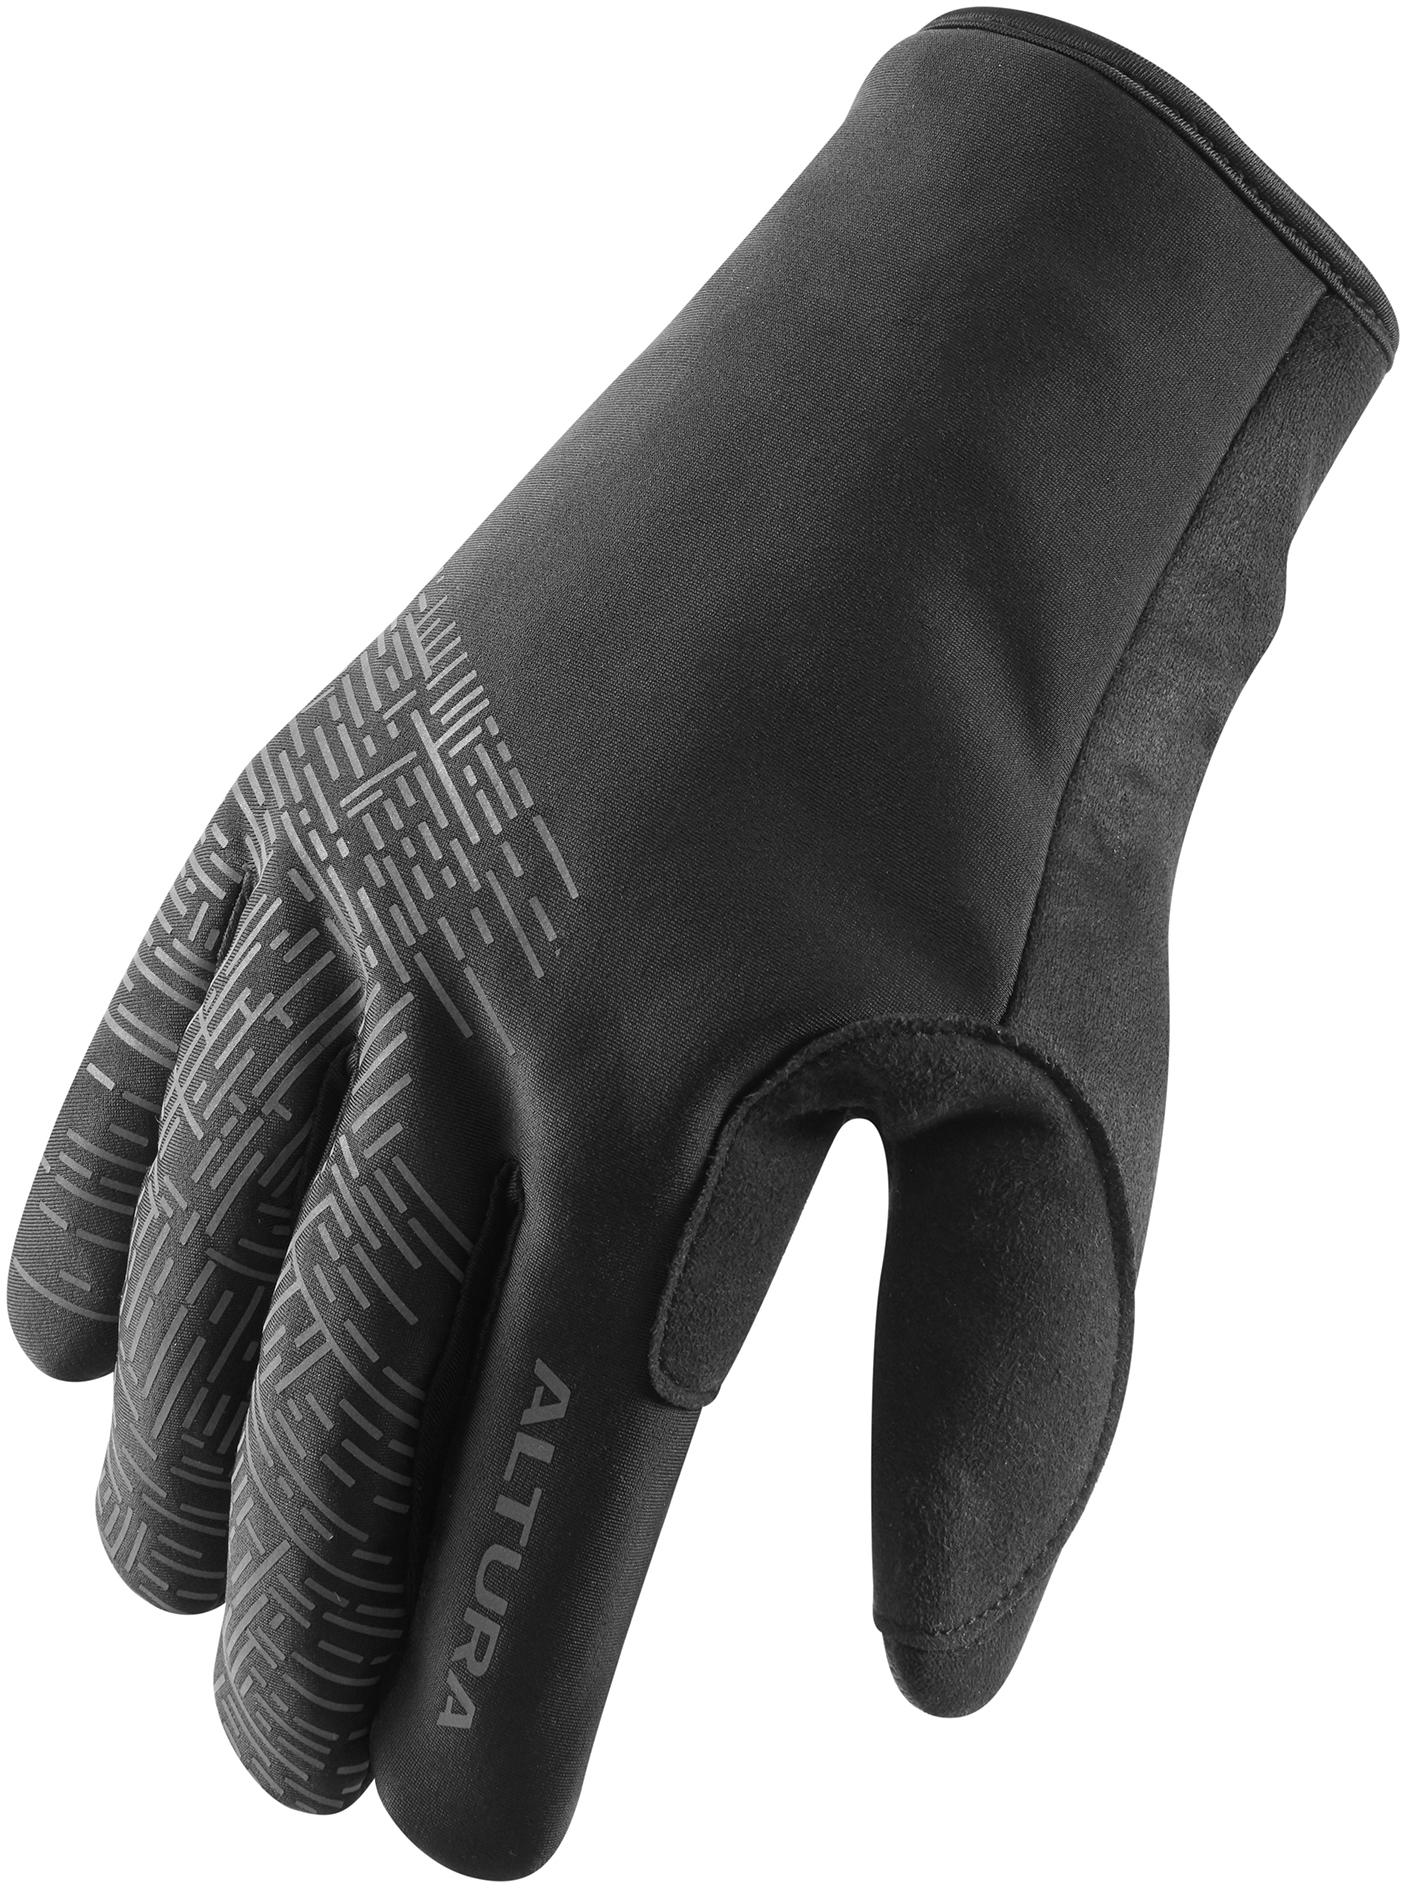 Altura Polartec Waterproof Gloves Black M